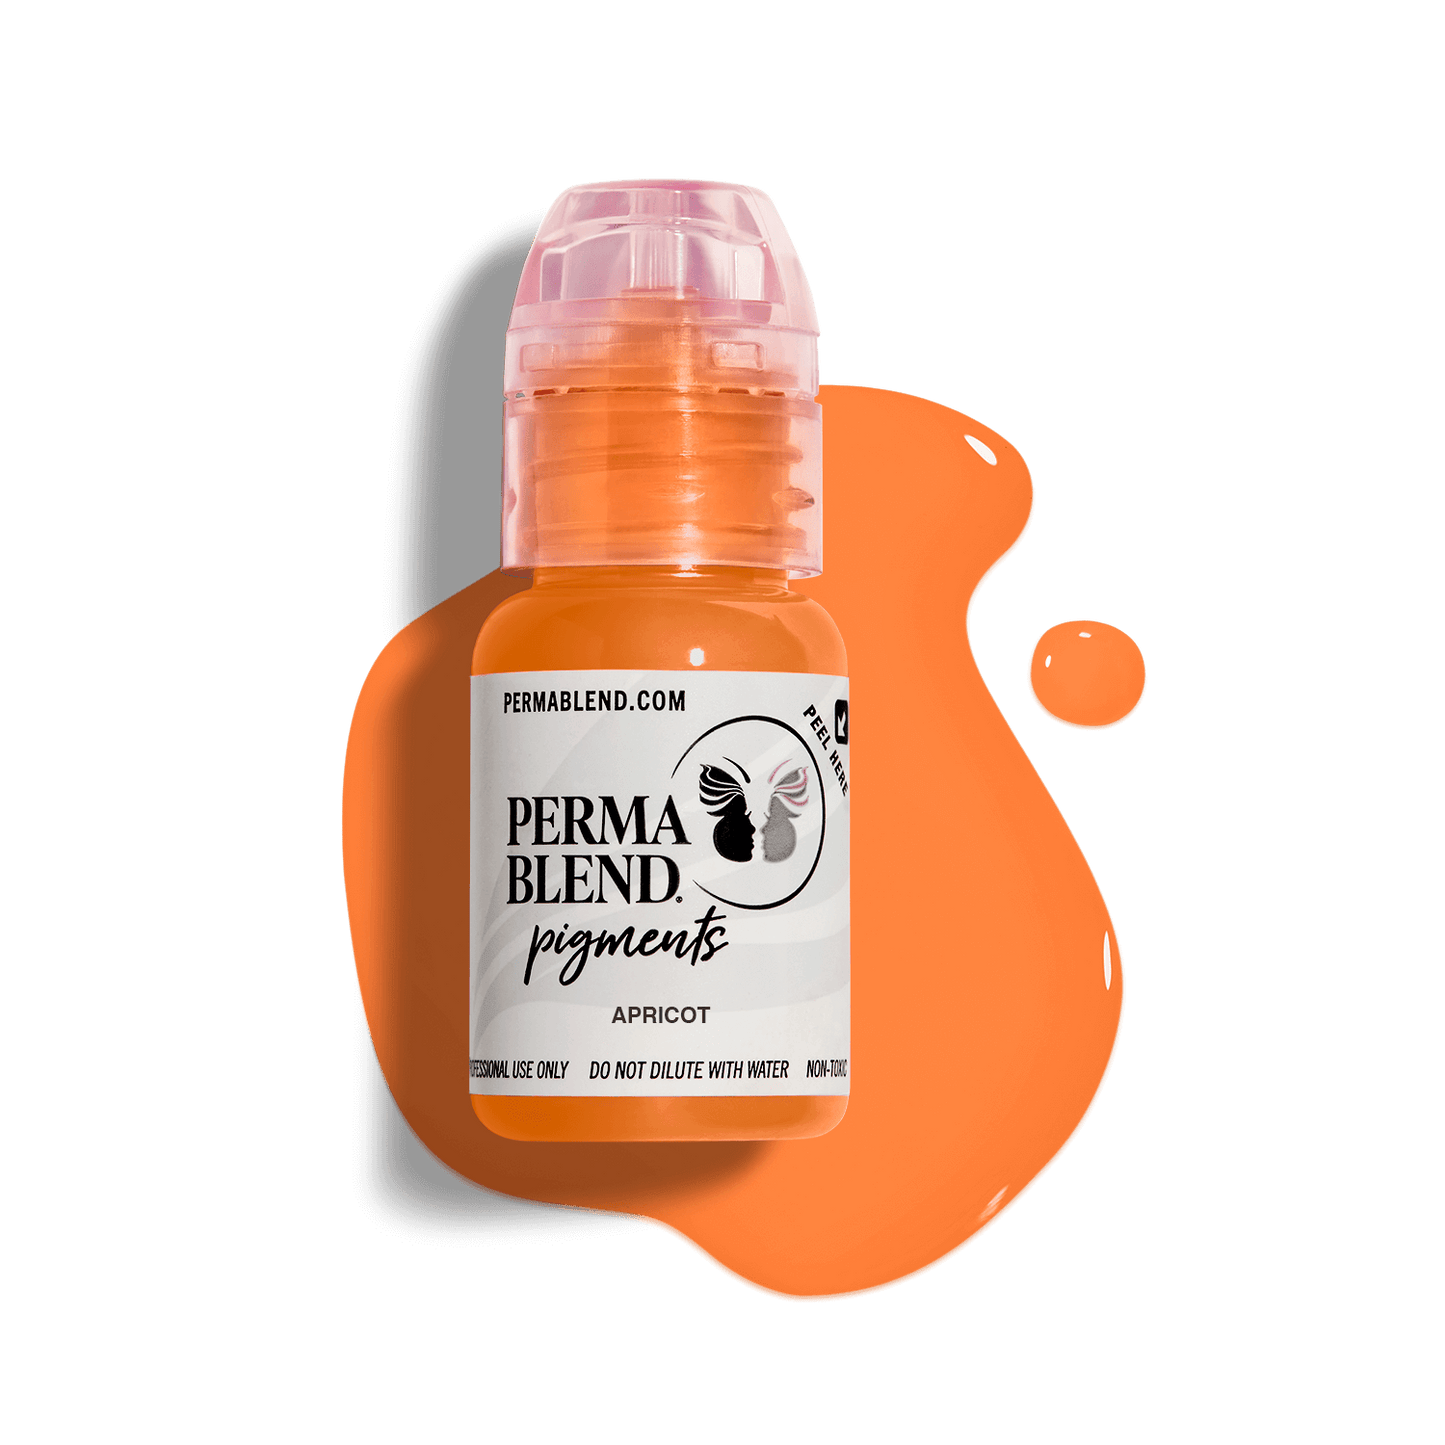 Perma Blend Pigments - Apricot